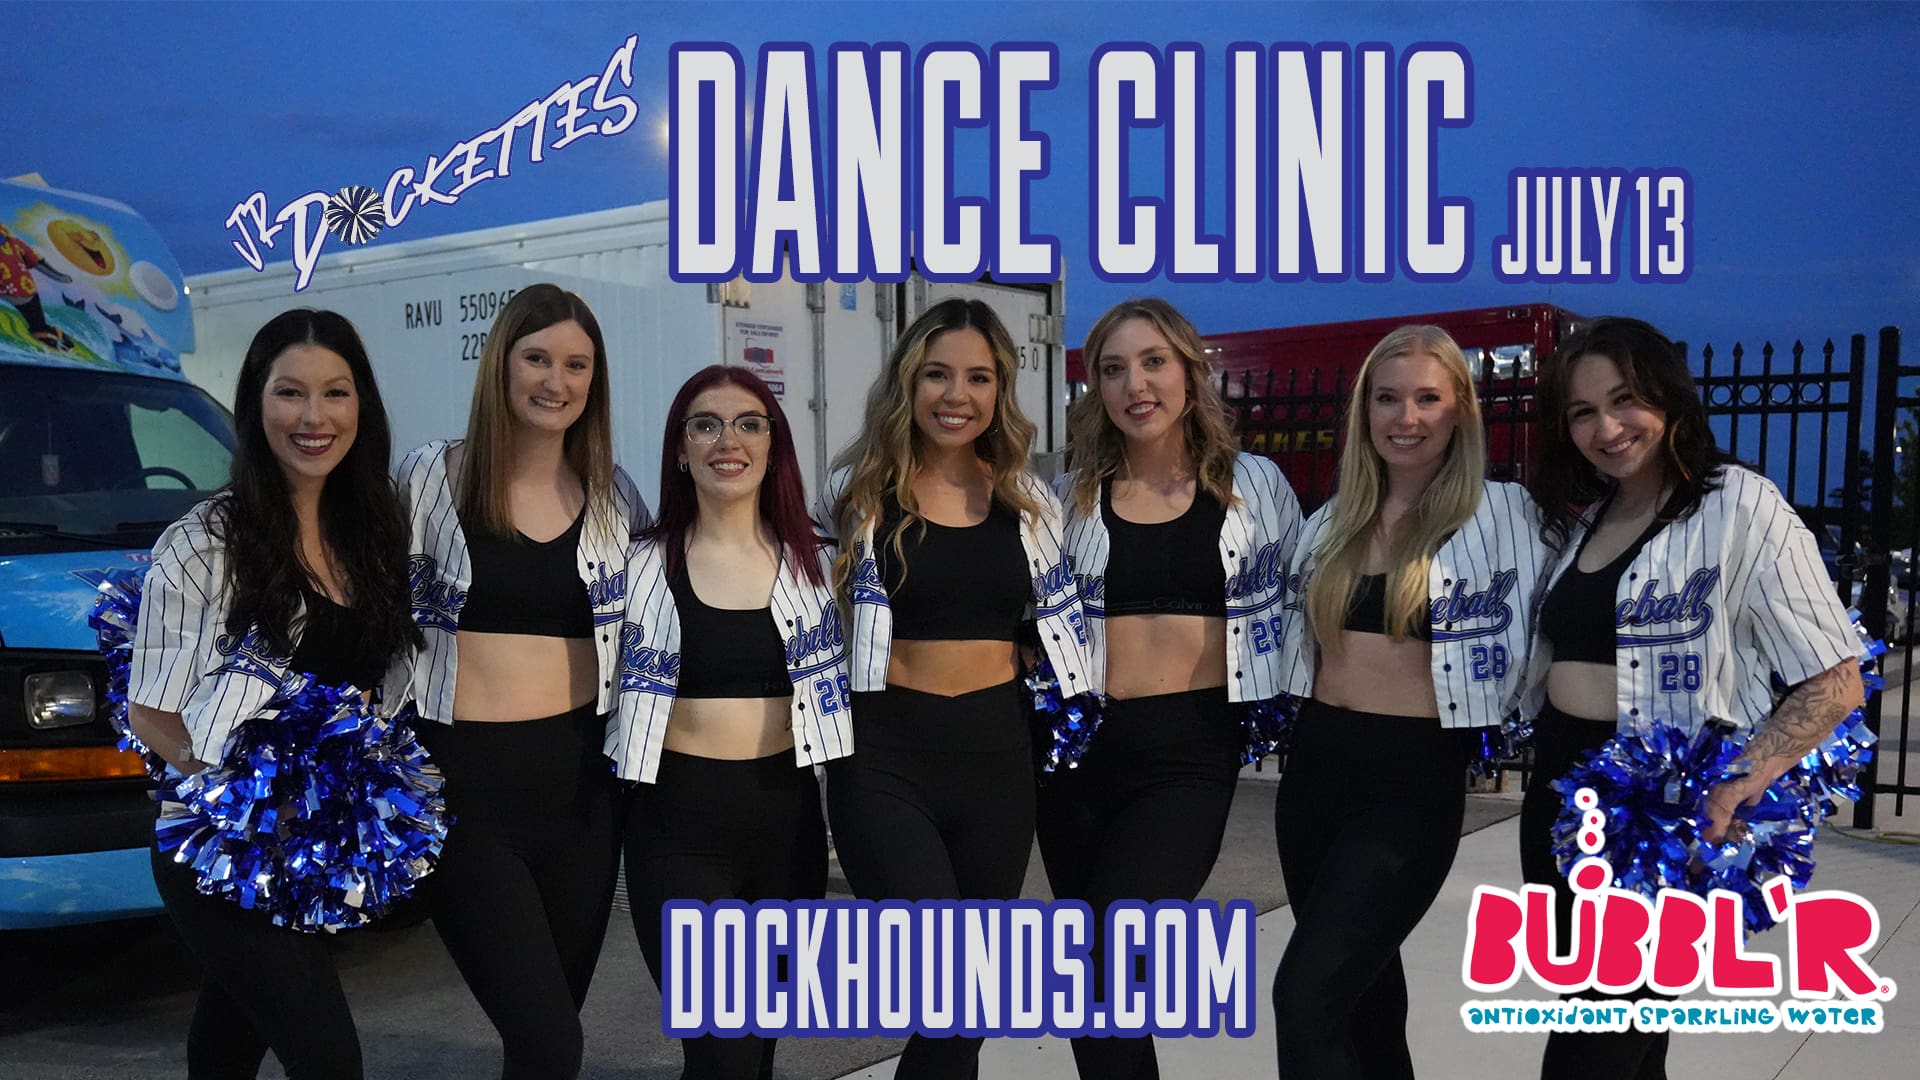 Dockettes Dance Clinic